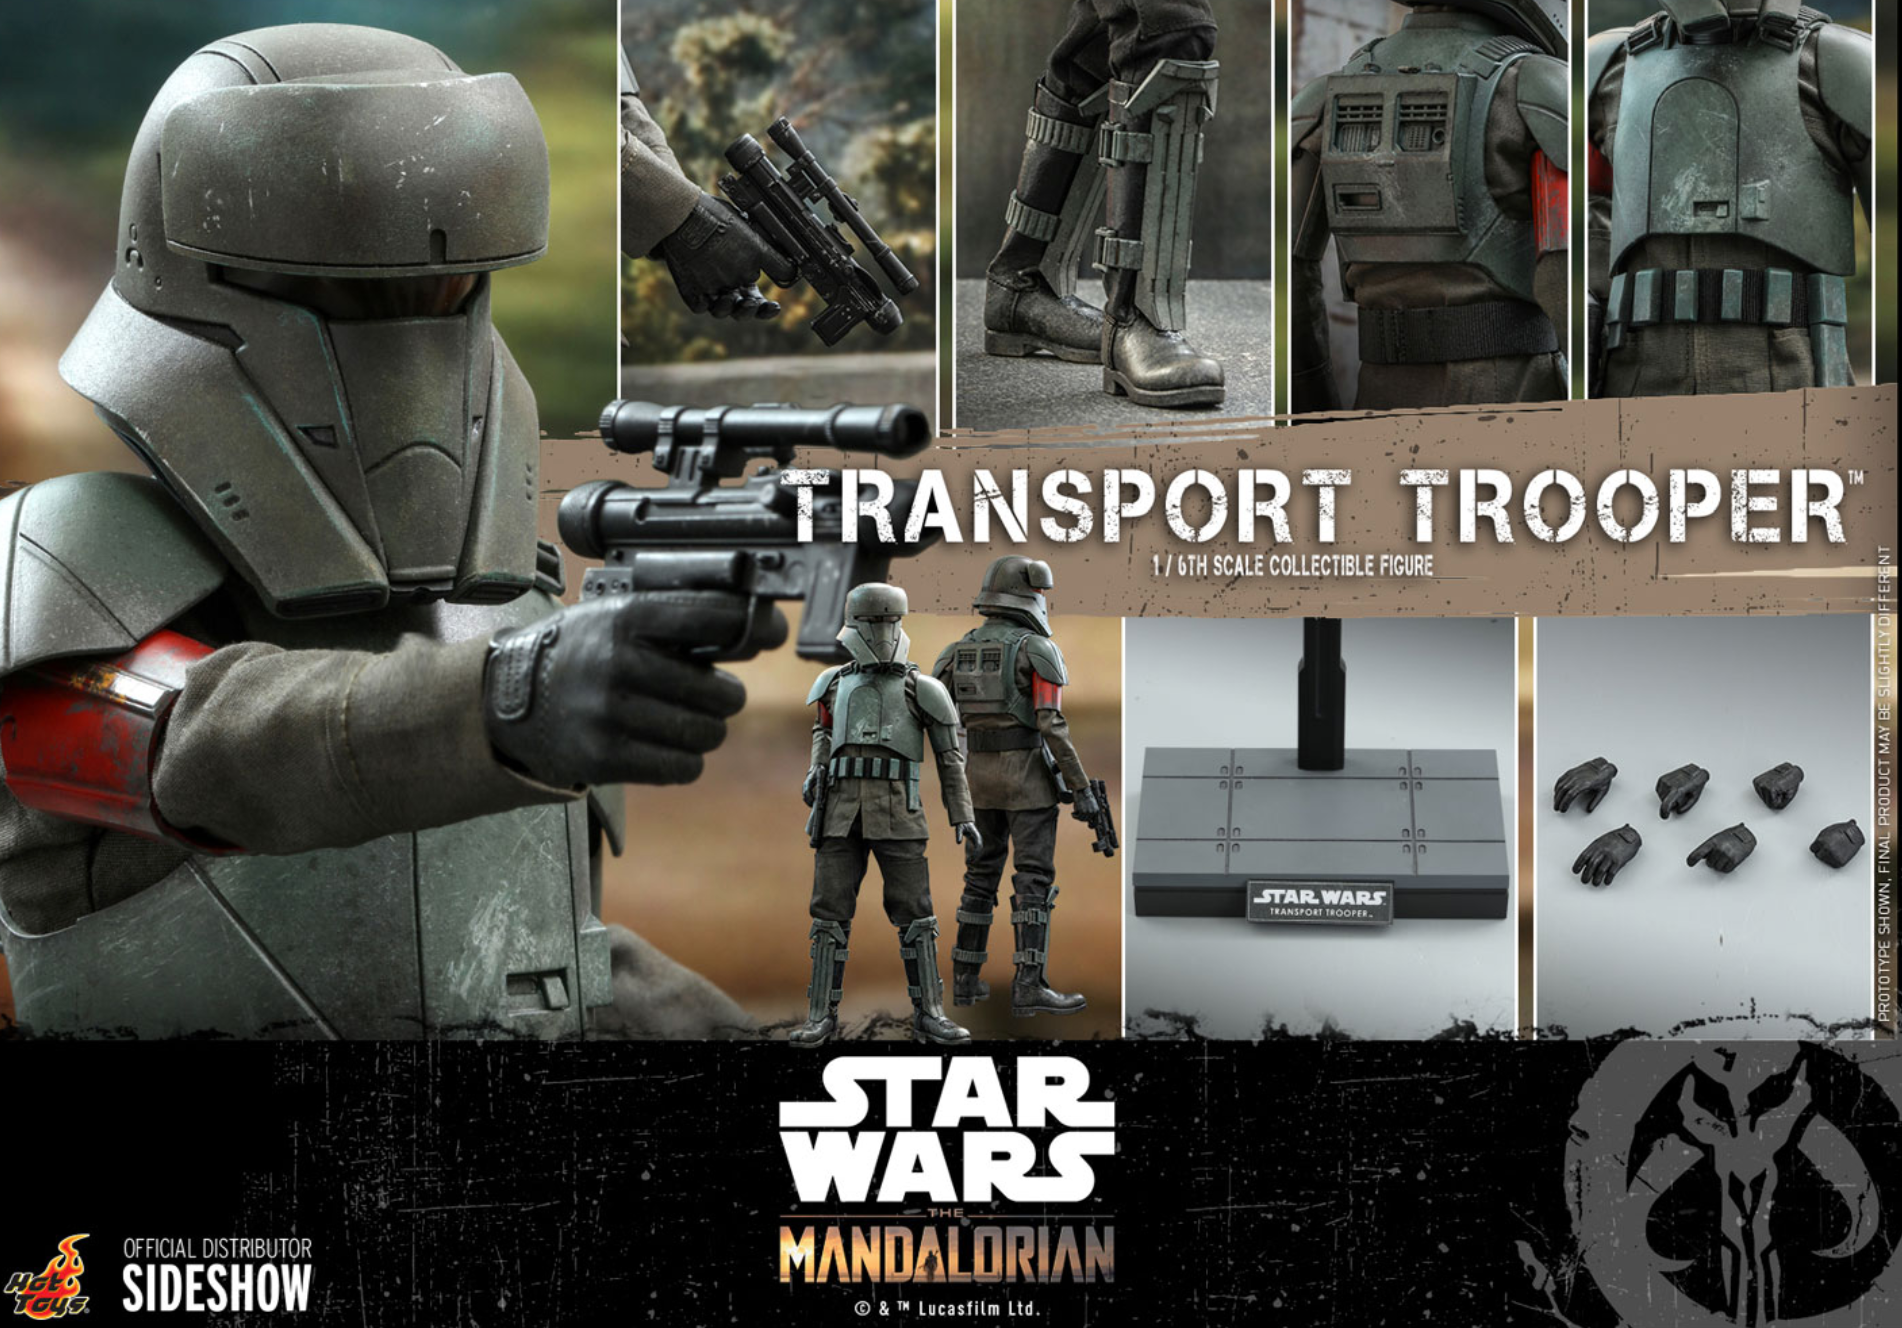 Hot Toys Star Wars The Mandalorian Transport Trooper